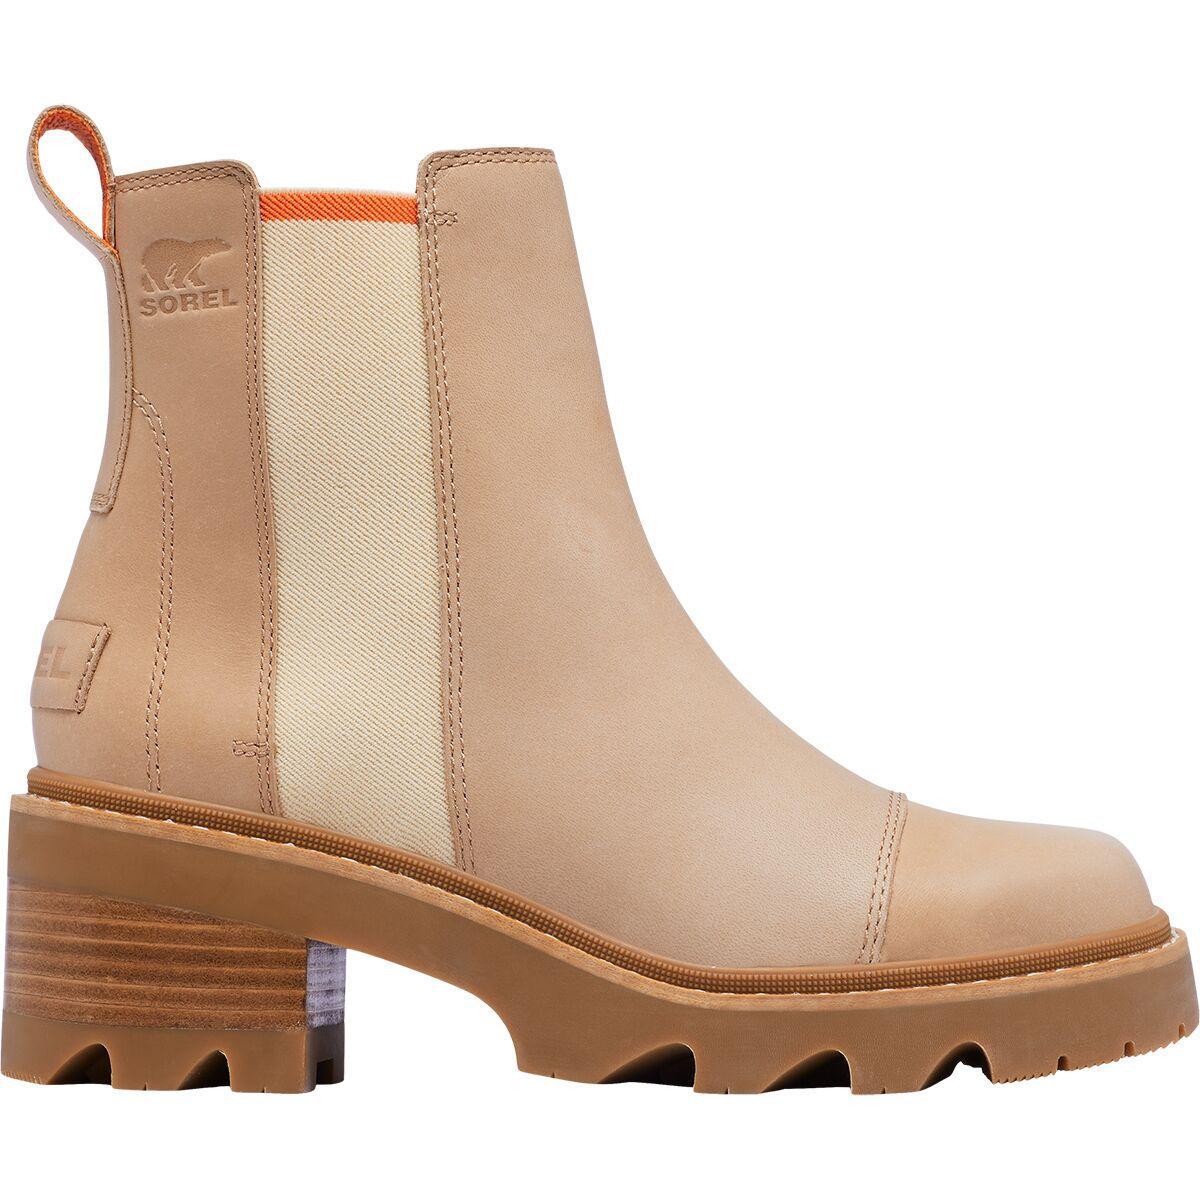 SOREL Joan Now Waterproof Chelsea Boot Product Image